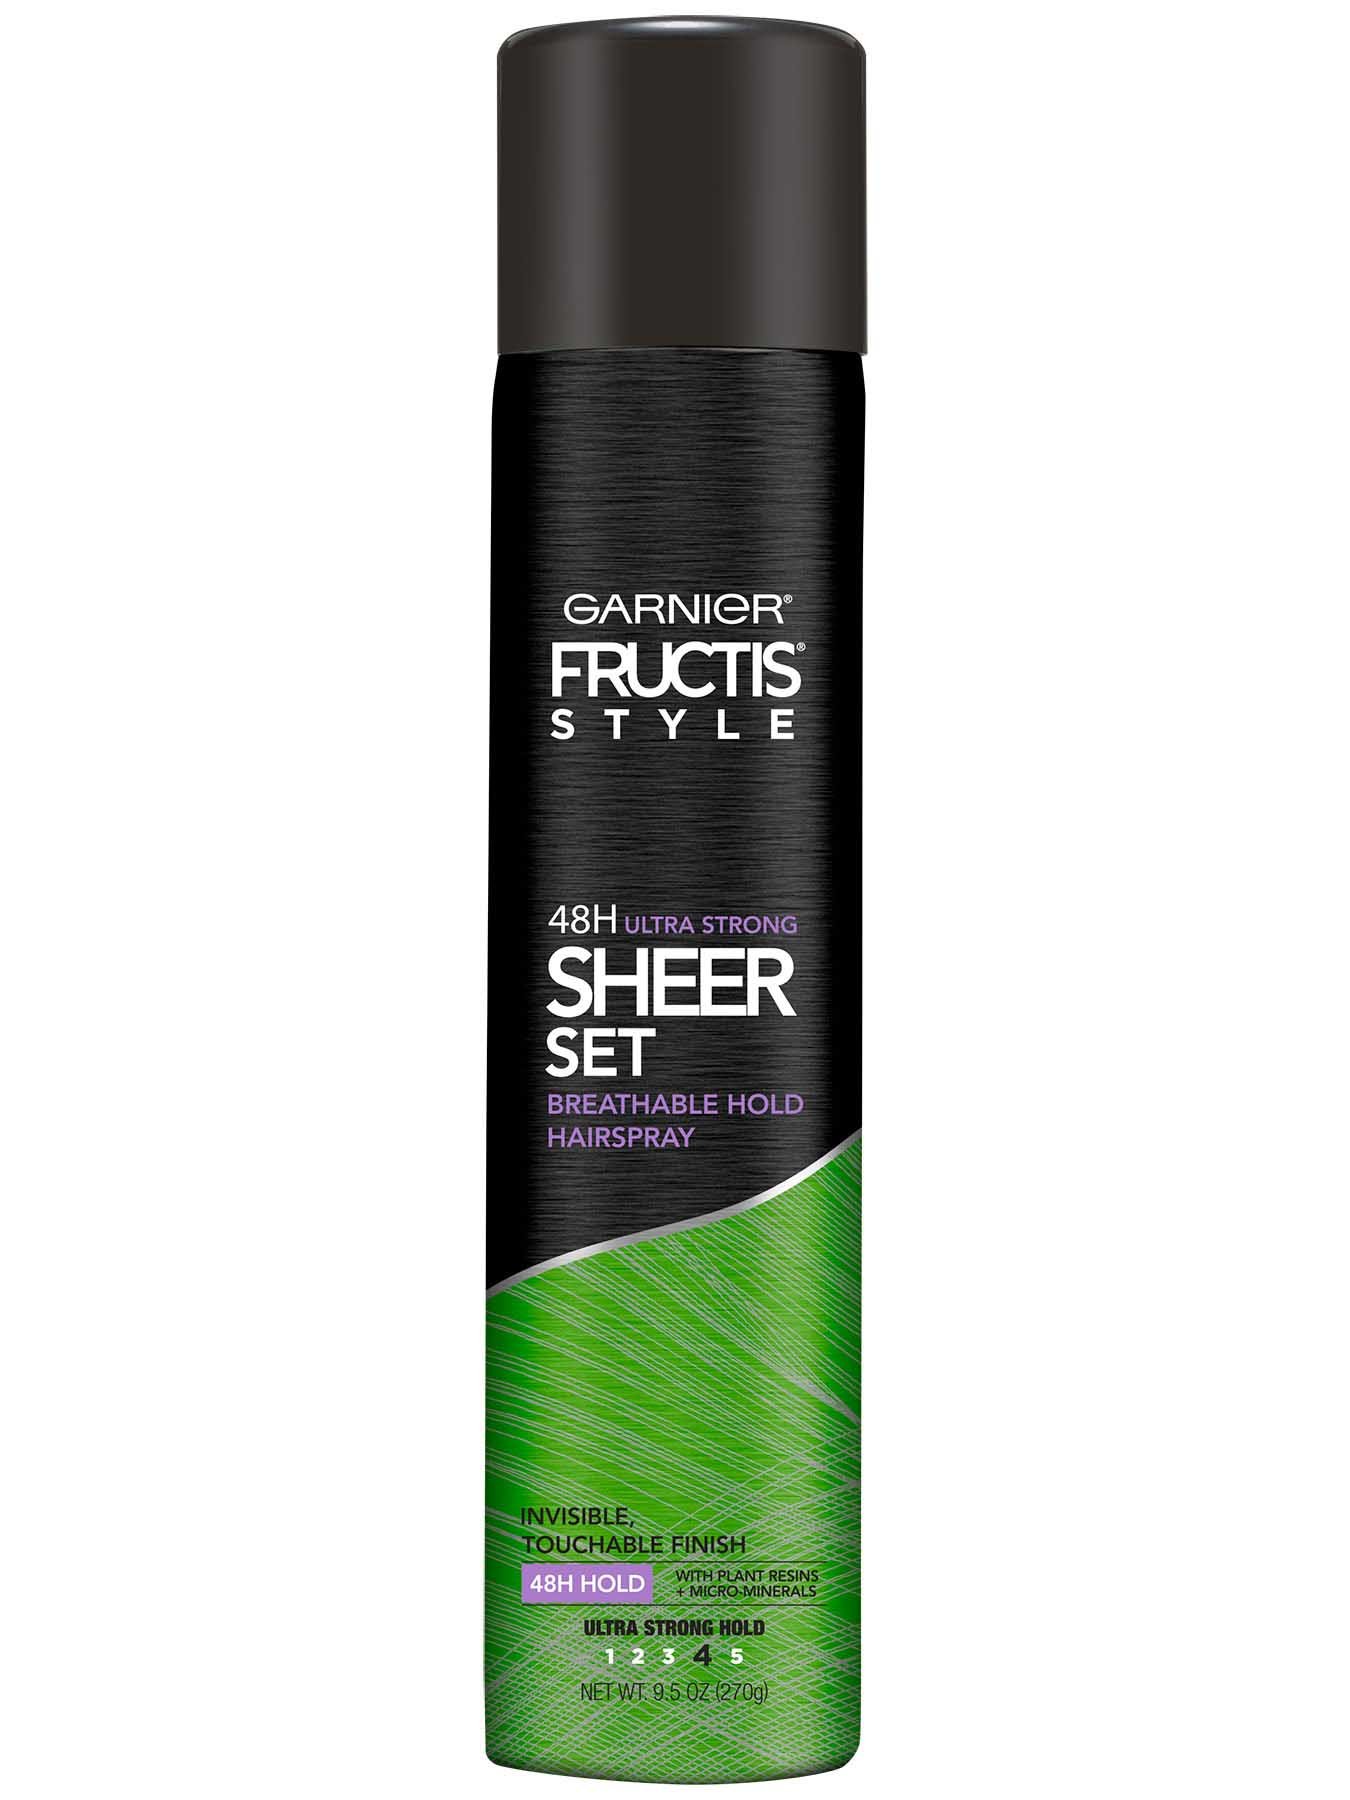 Sheer Set Ultra Strong Hold Hairspray - Garnier Fructis Style